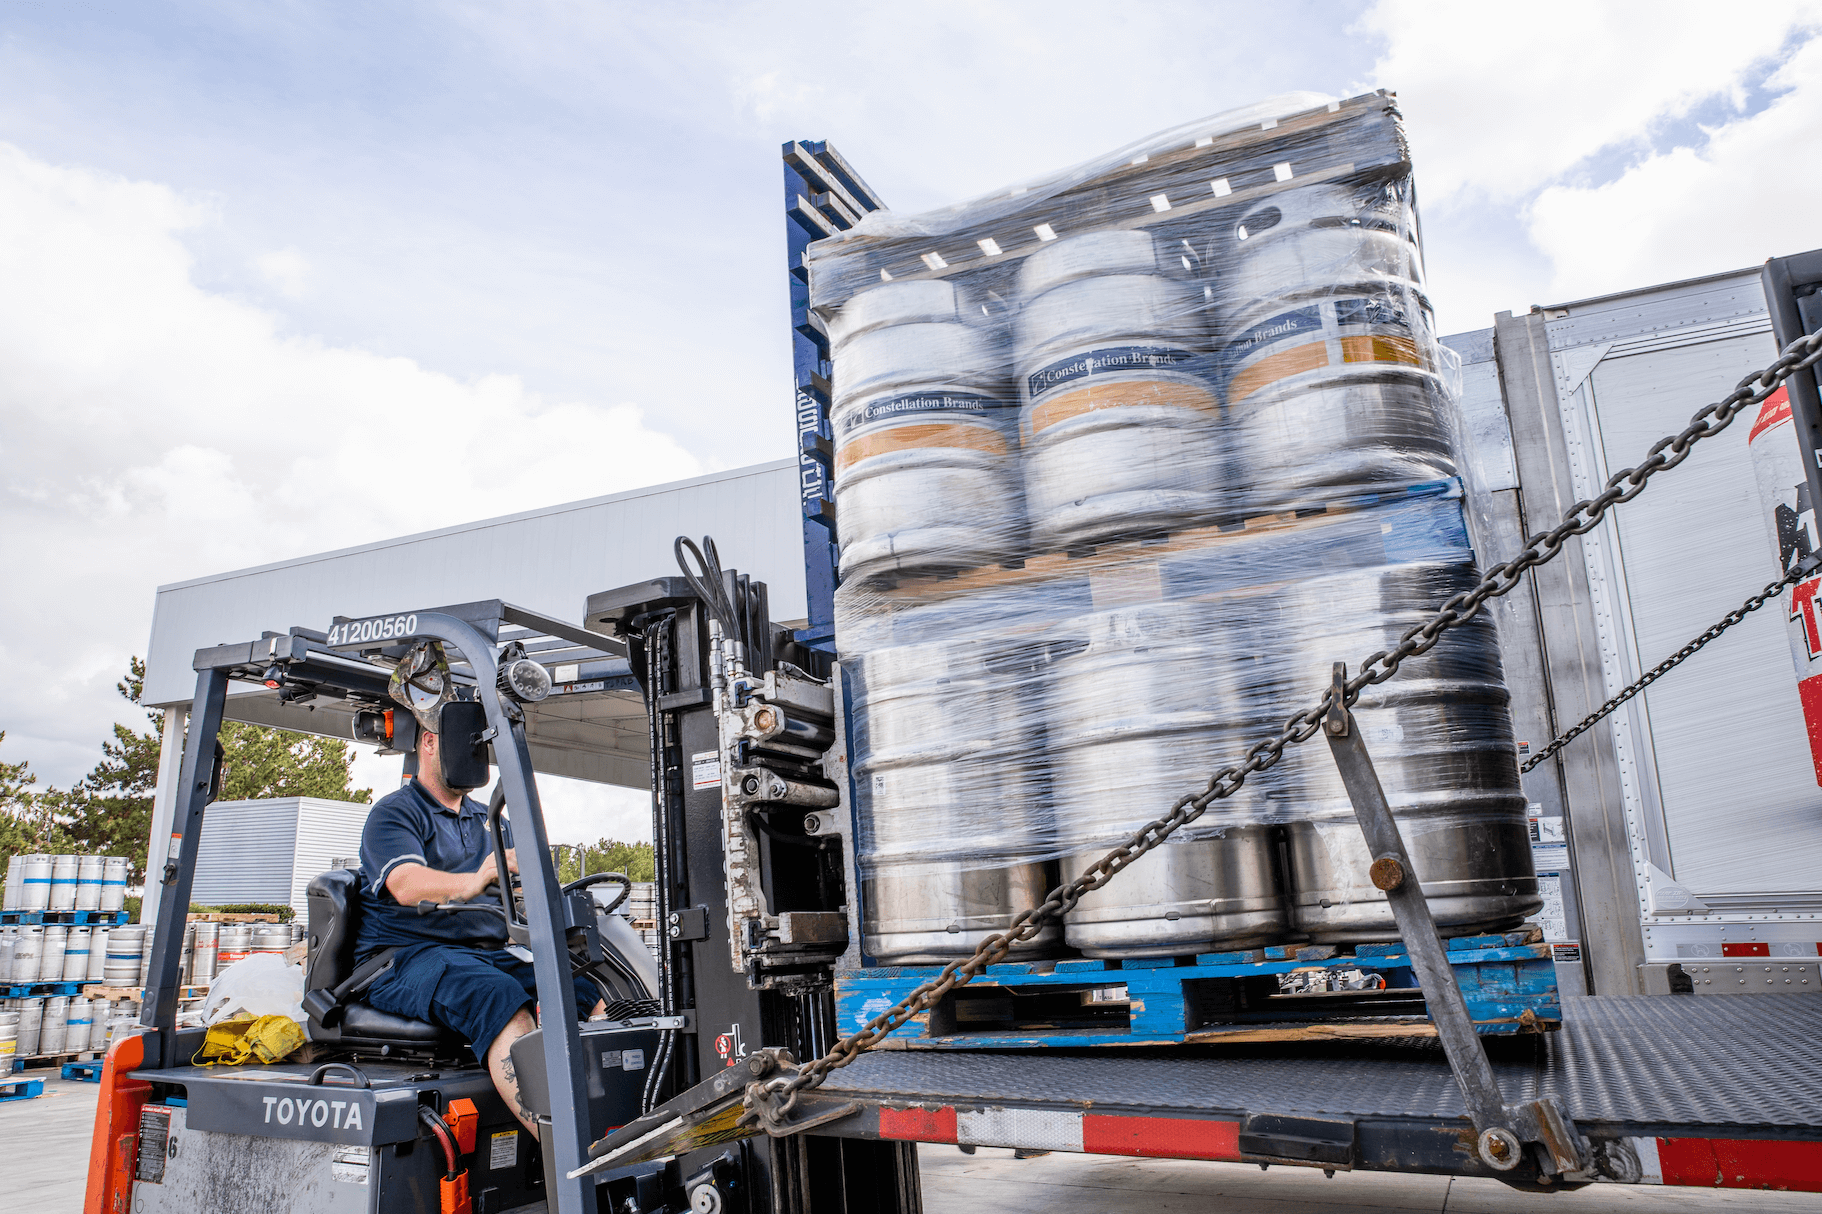 Forklift operator moving pallets of kegs of beer onto back of truck